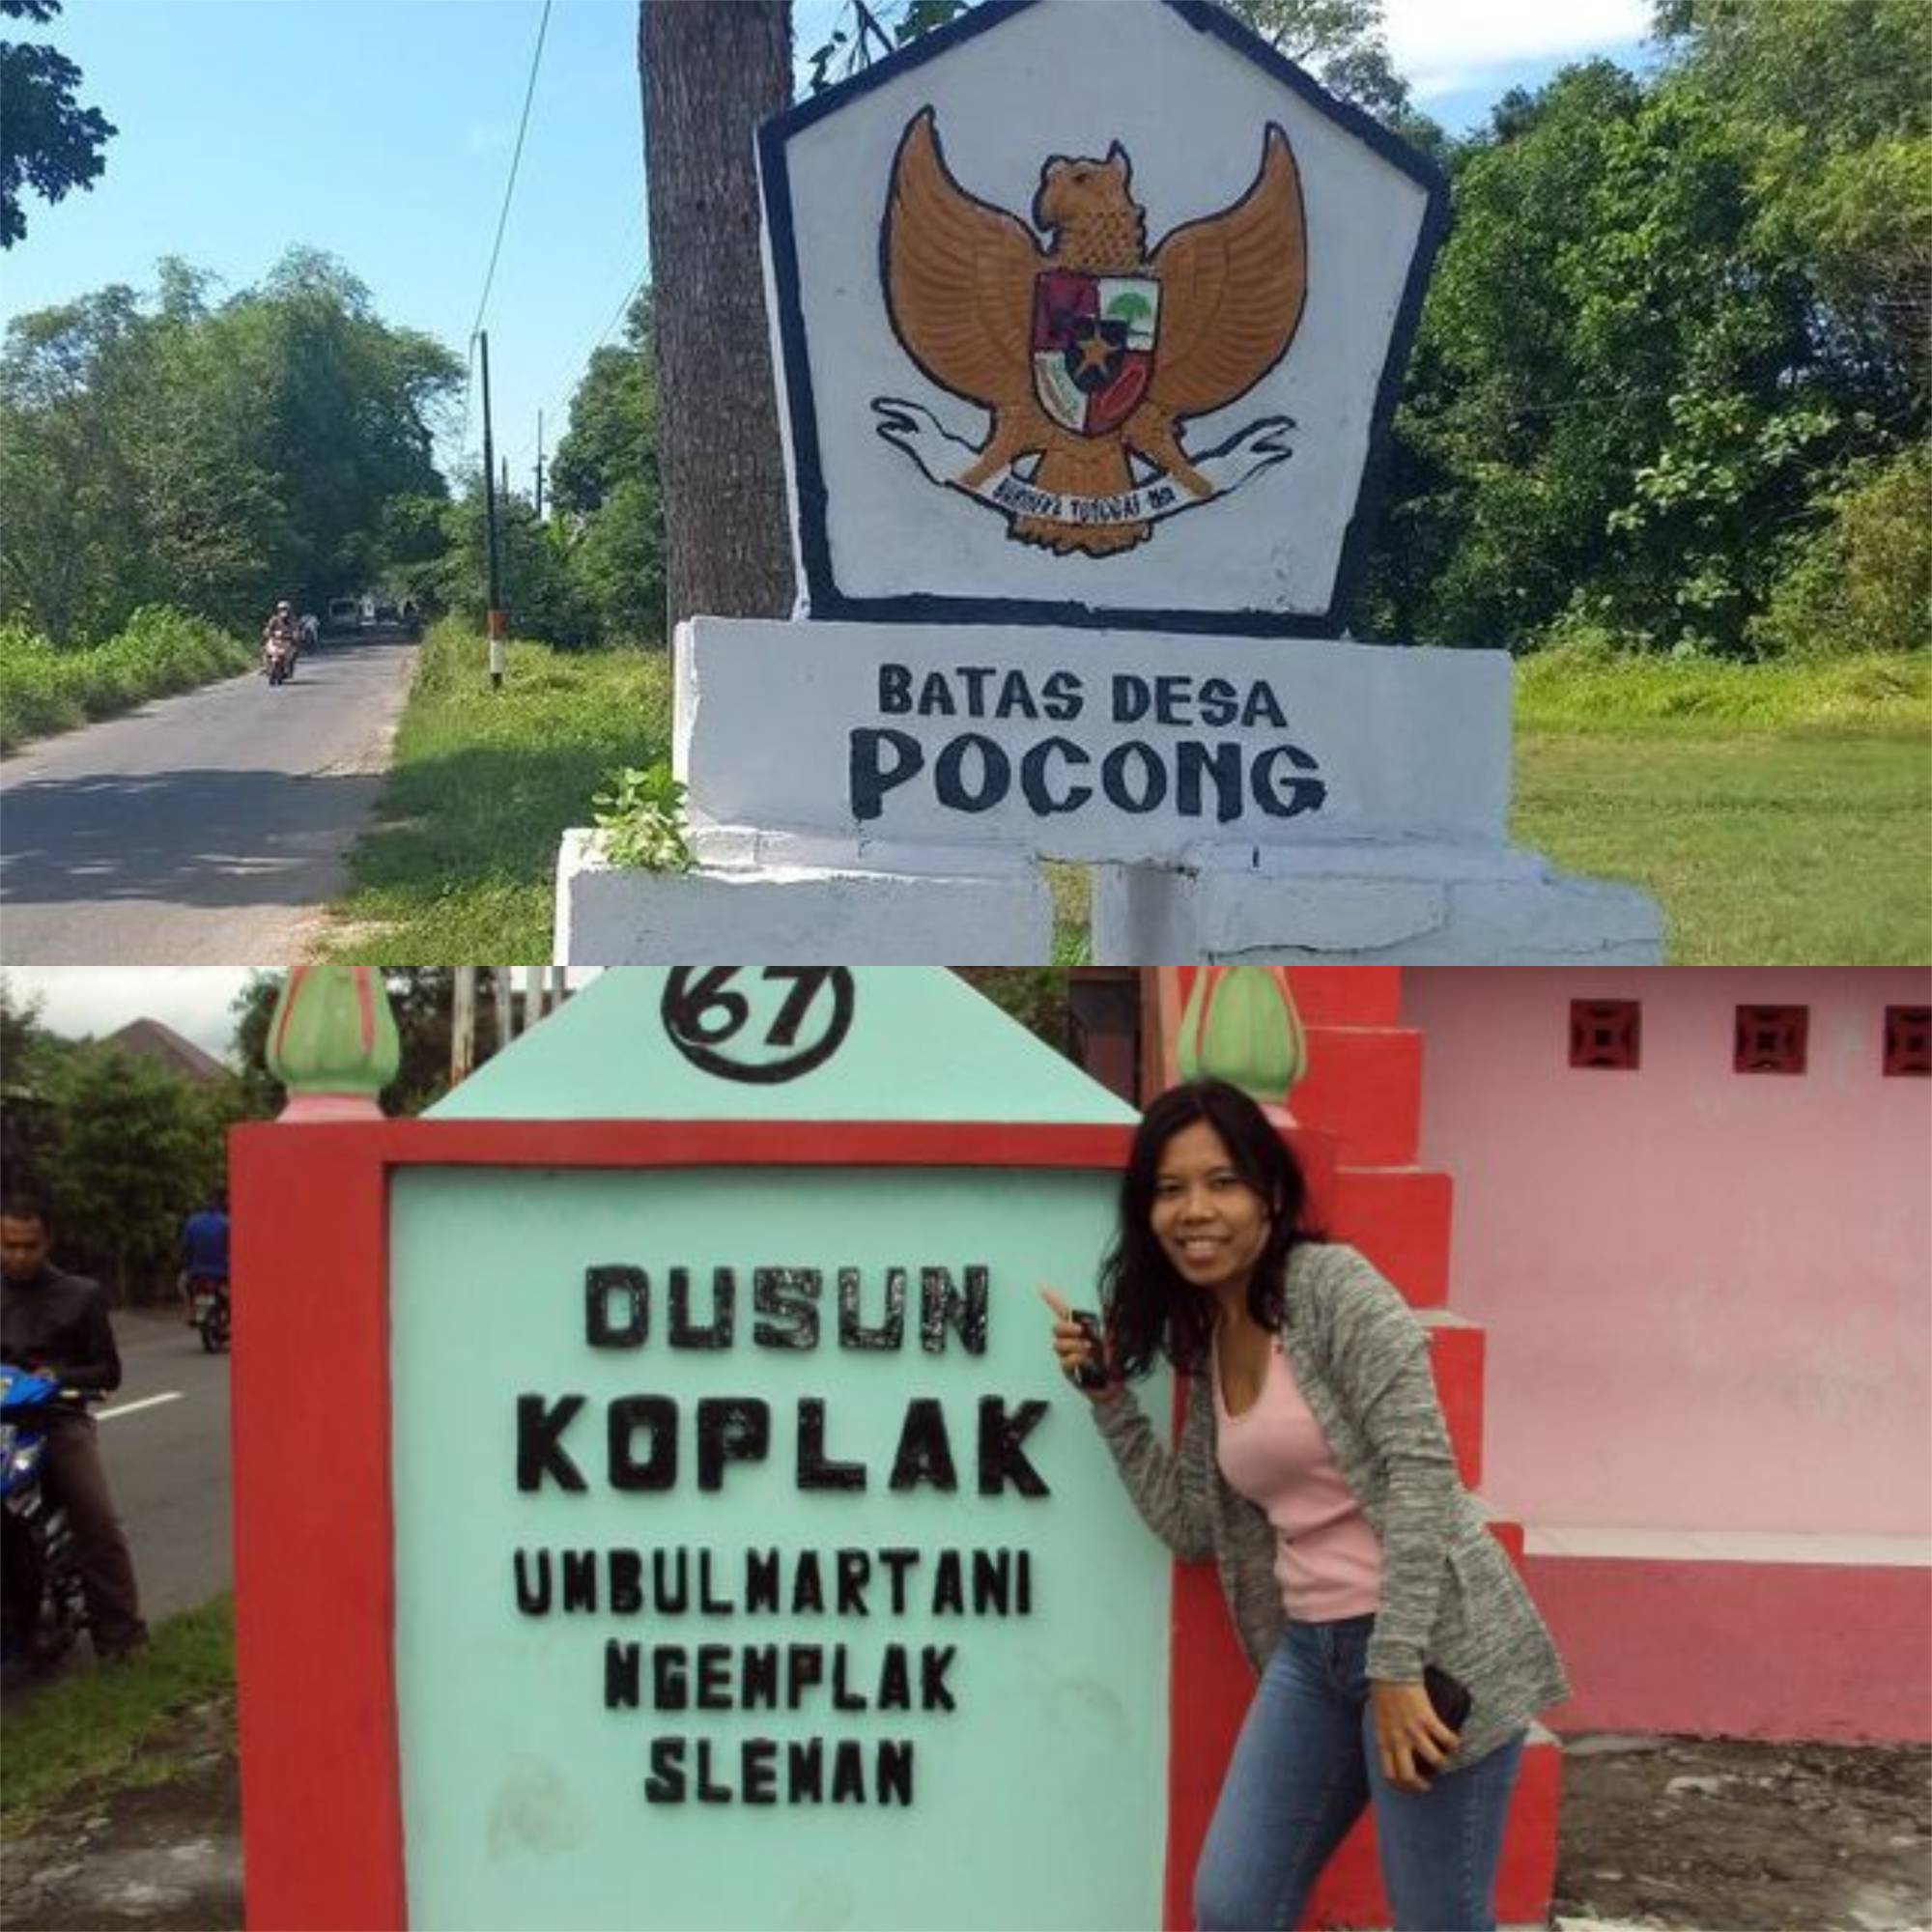 9 Nama Desa yang Unik dan Horor di Indonesia, Mau Ketawa Tapi Takut Kualat